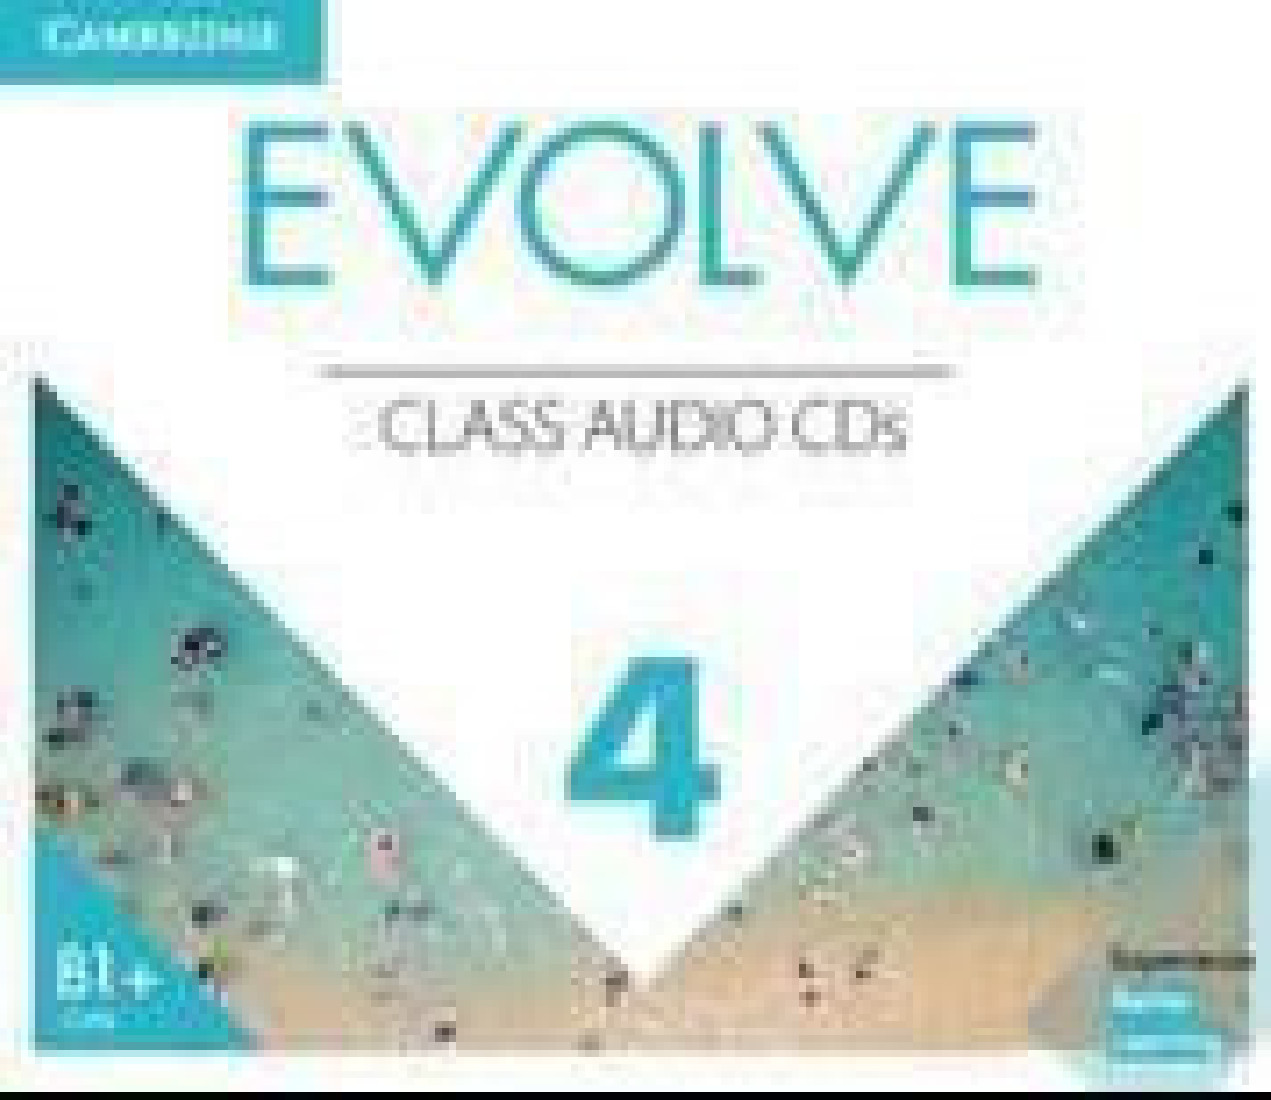 EVOLVE 4 CD CLASS